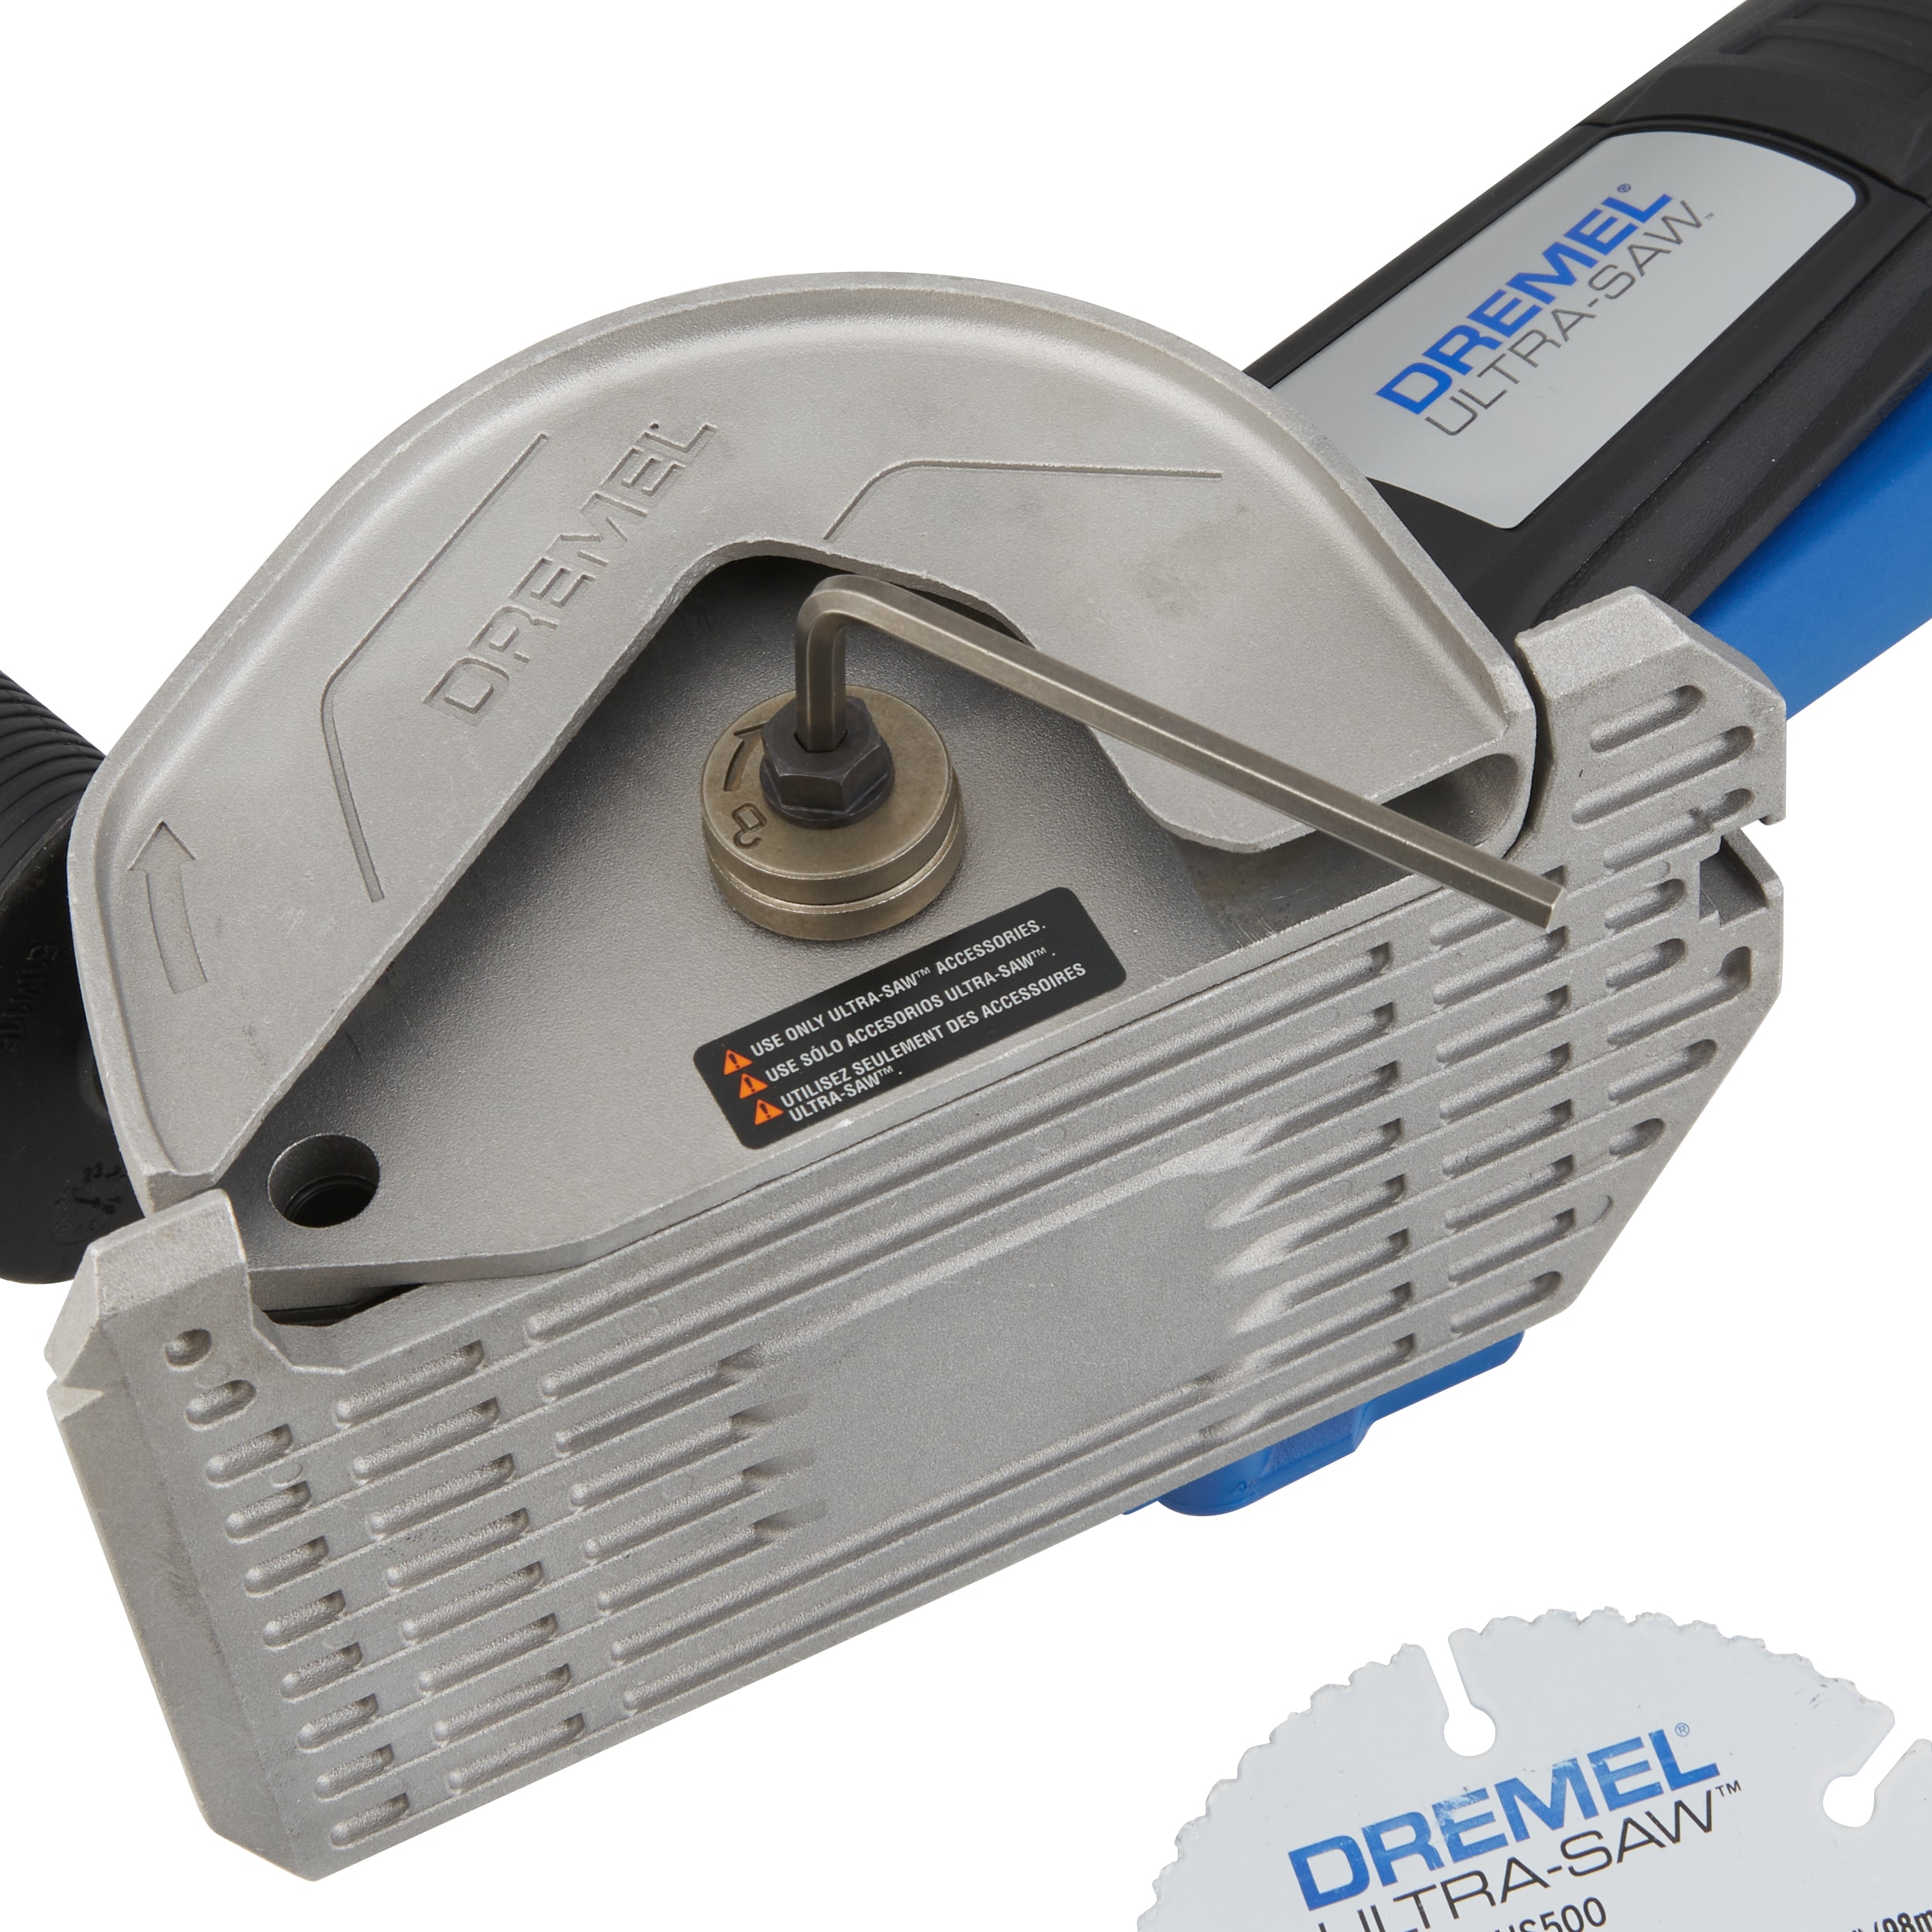 Dremel Ultra-Saw 7.5-Amp 4-in Corded Compact Saw Kit Circular Saw in the  Circular Saws department at